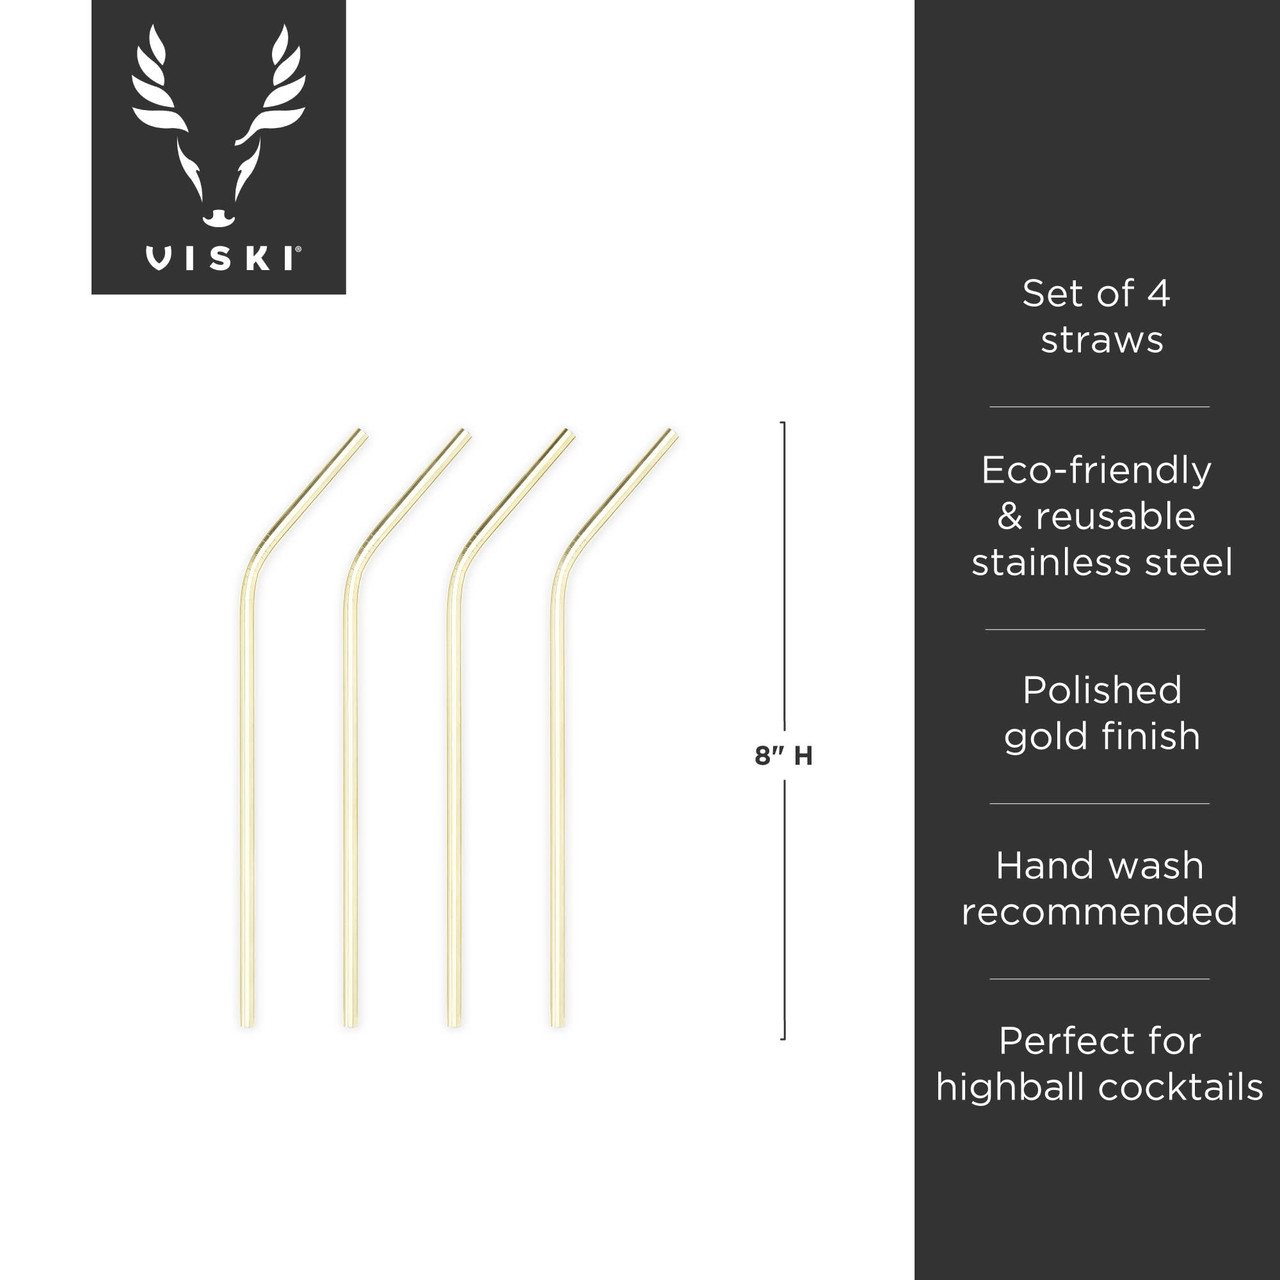 Gold Cocktail Straws by Viski®